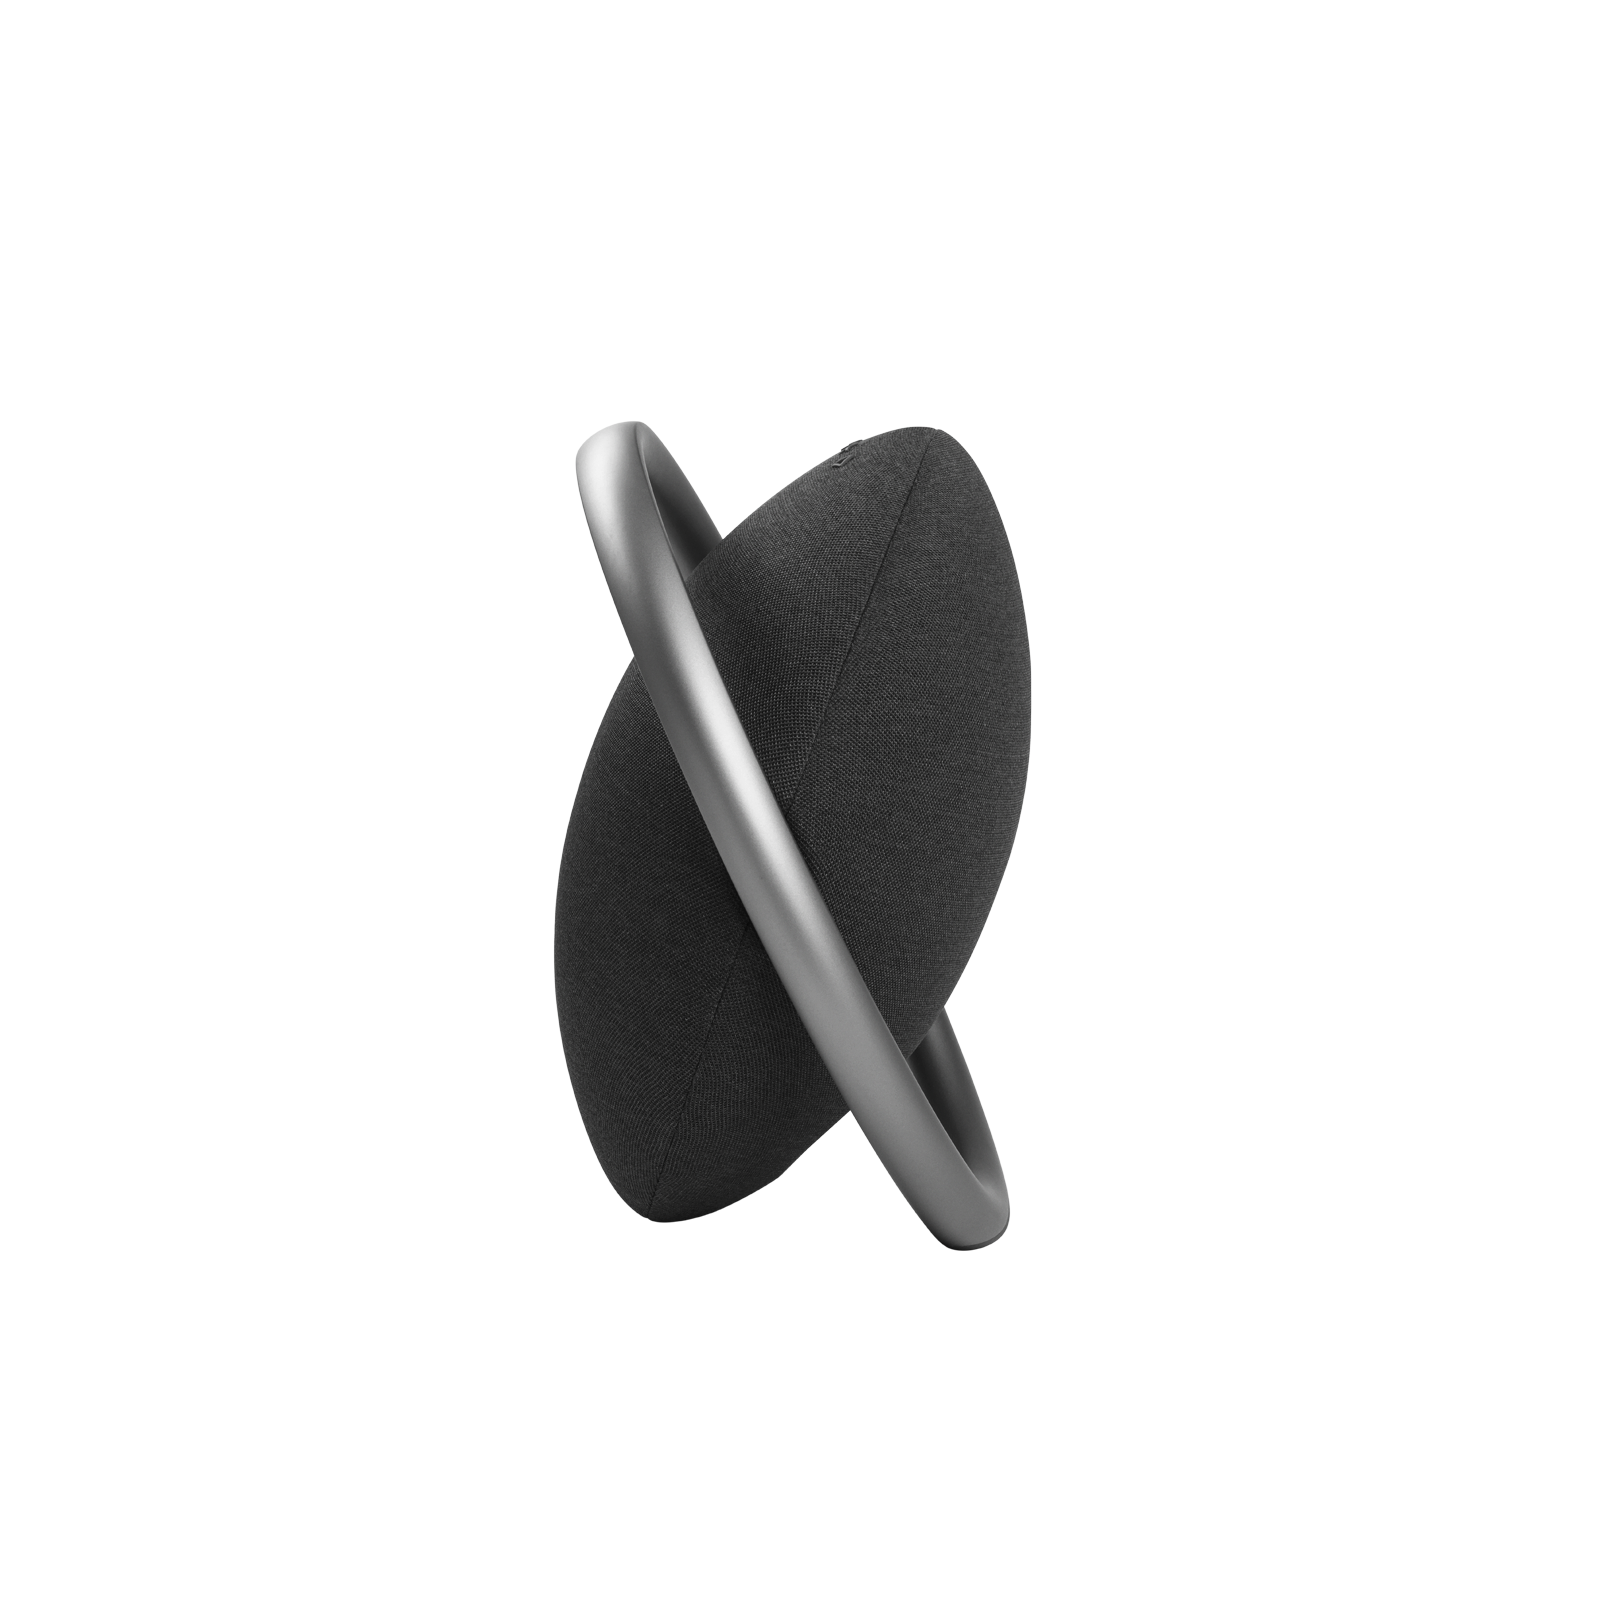 Onyx Studio 7 - Black - Portable Stereo Bluetooth Speaker - Left